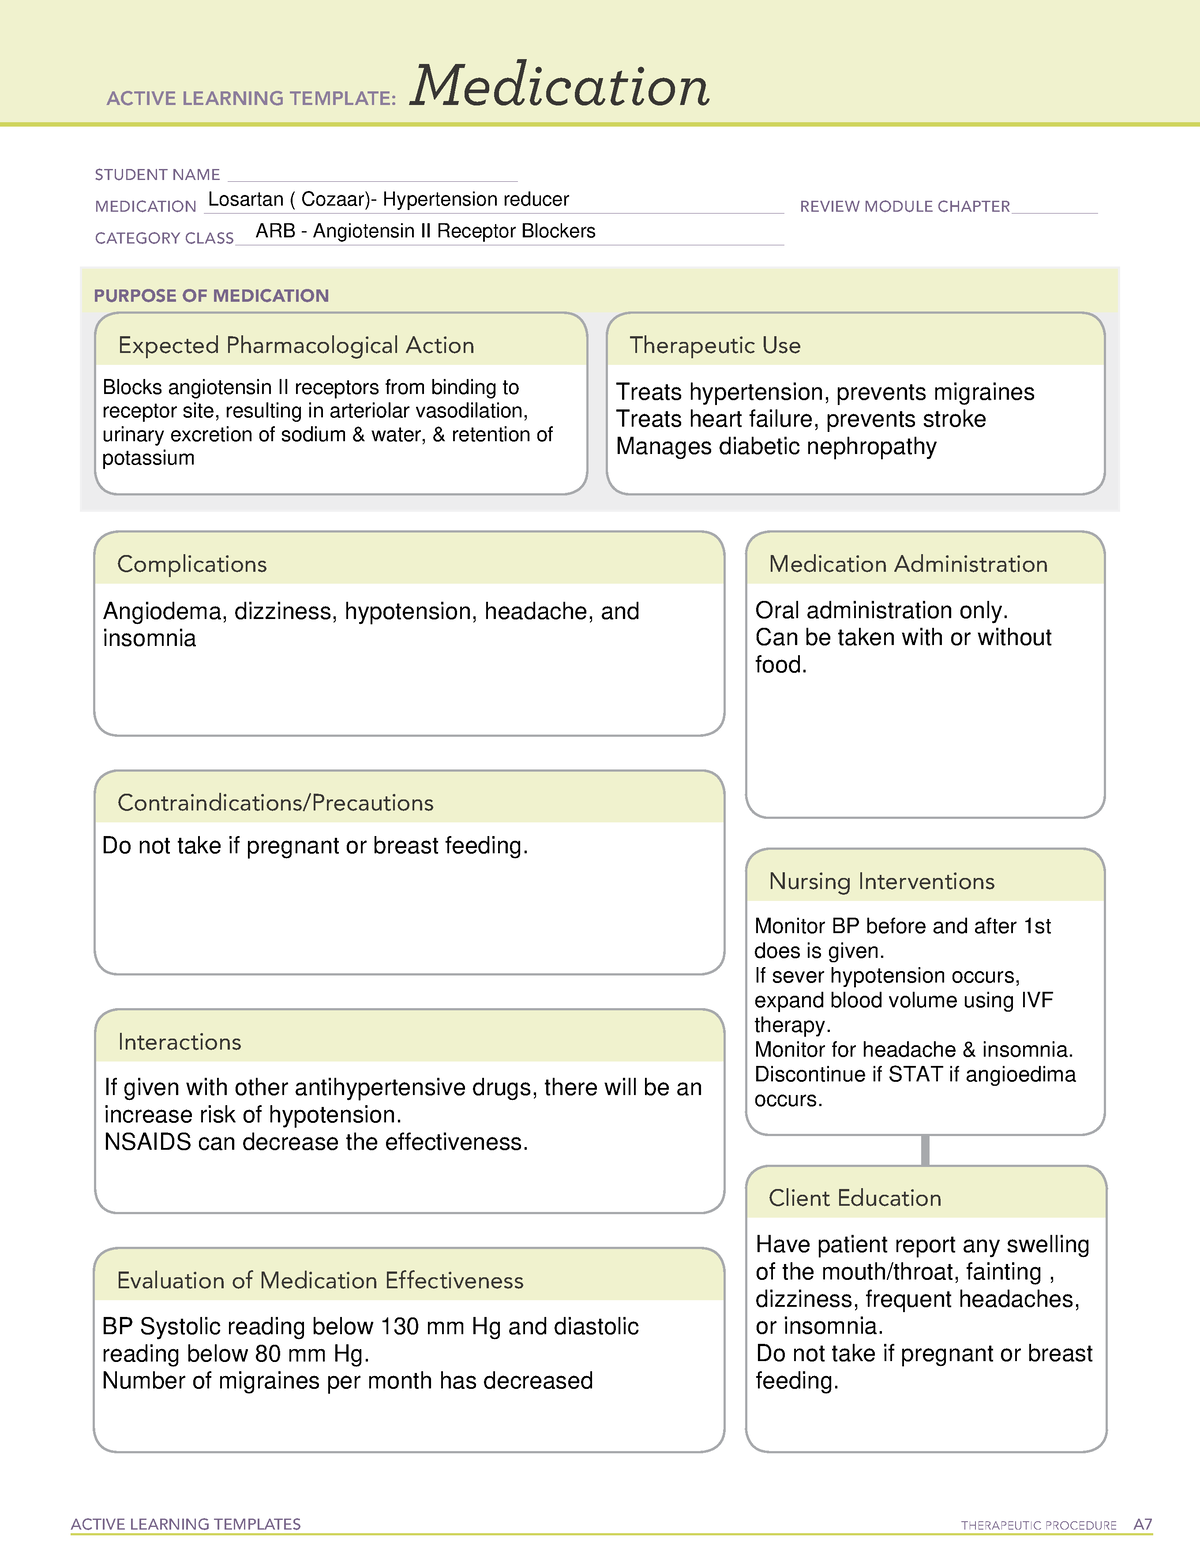 ati-losartan-cozaar-arb-med-sheet-active-learning-templates